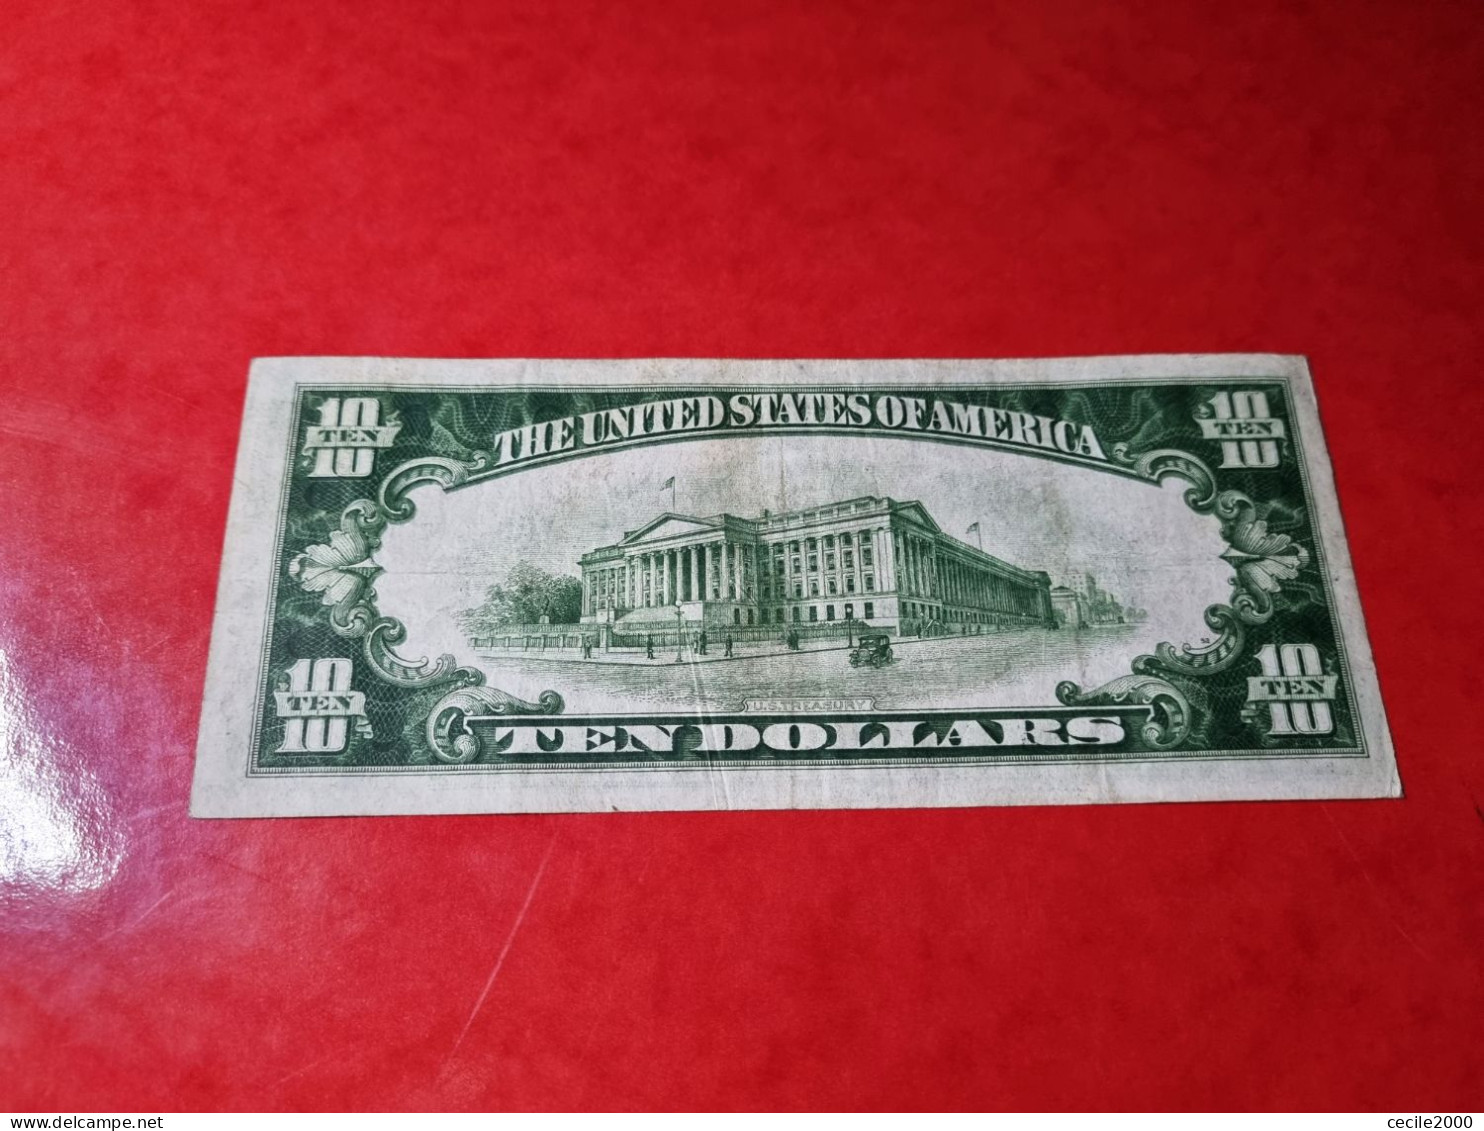 1928 USA $10 DOLLARS *GOLD ON DEMAND NY* UNITED STATES BANKNOTE XF BILLETE ESTADOS UNIDOS *COMPRAS MULTIPLES CONSULTAR* - Billetes De Estados Unidos (1928-1953)